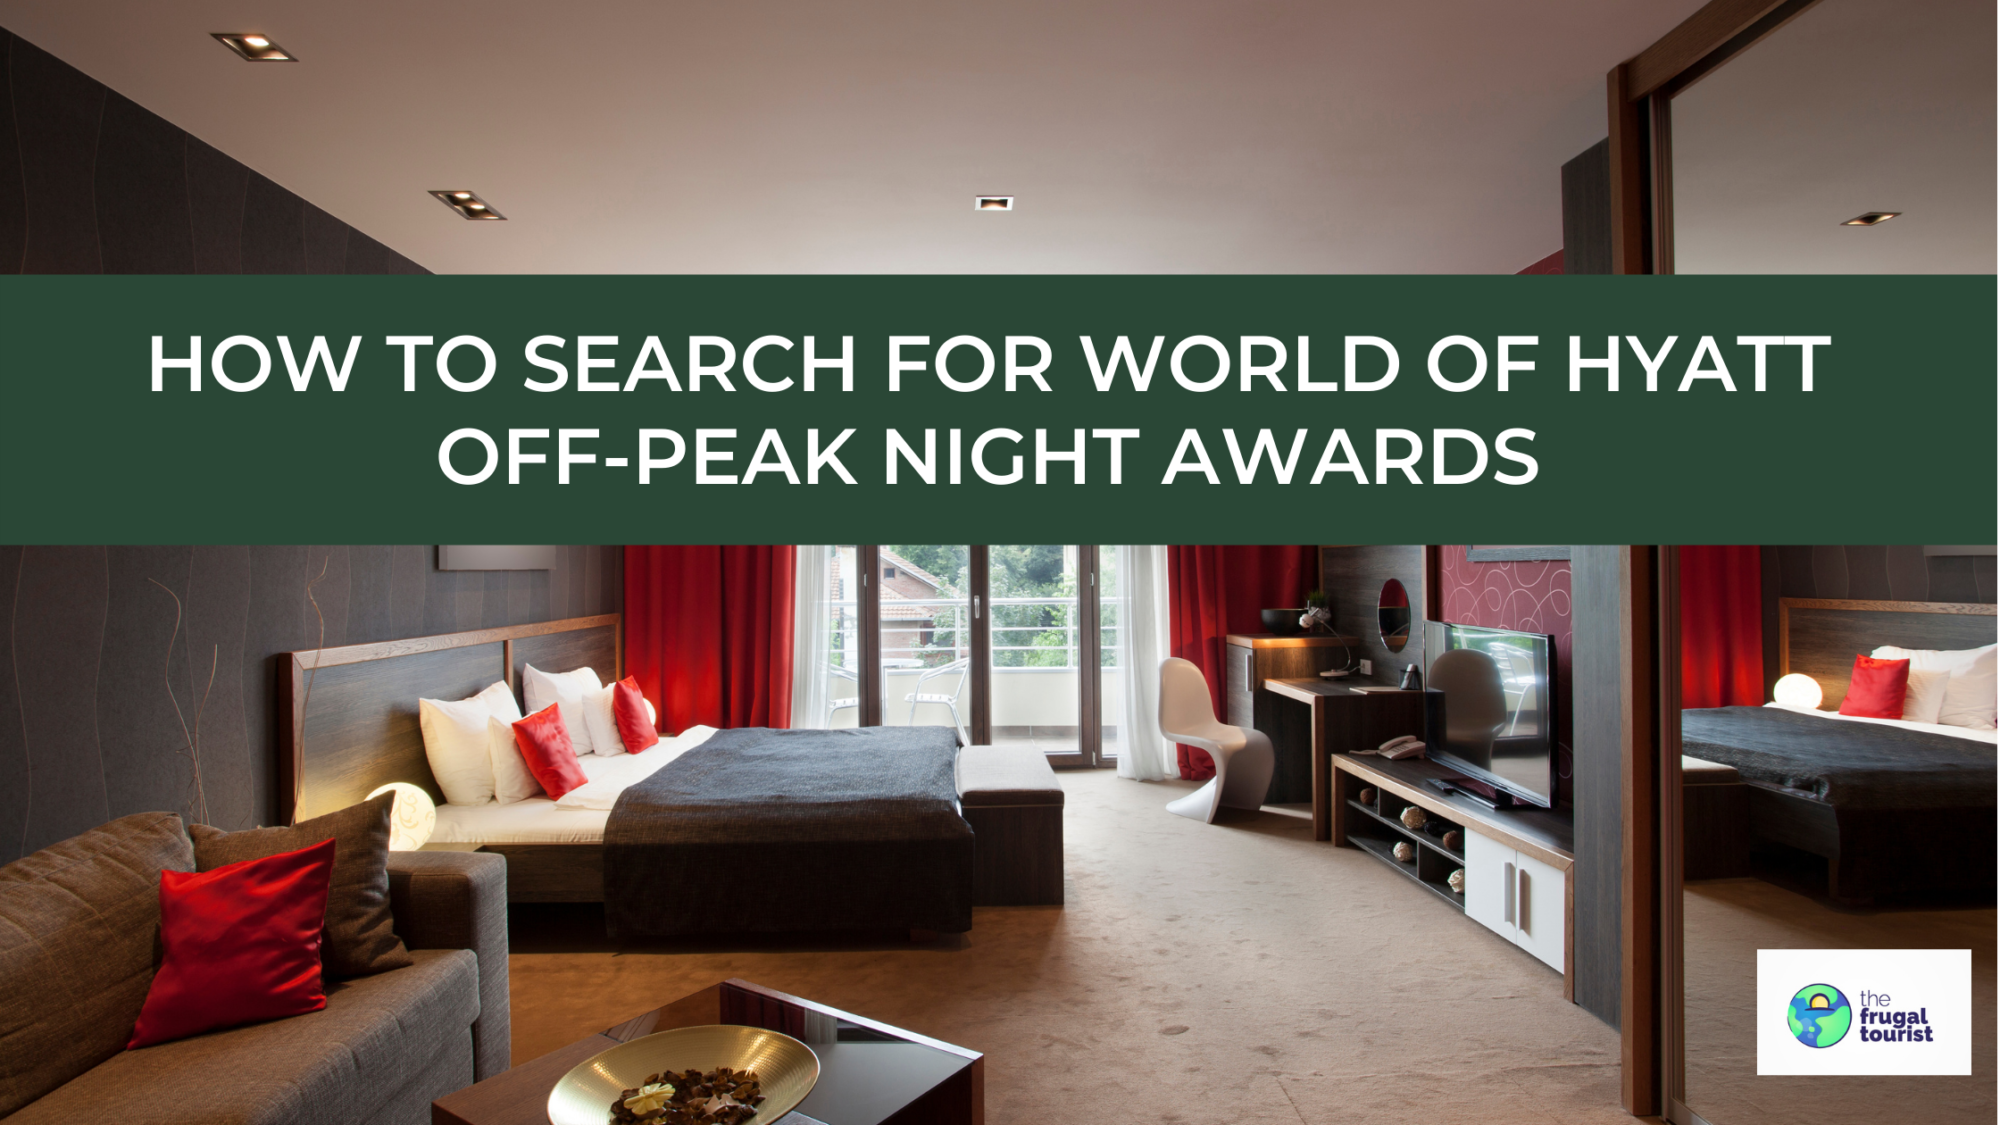 How To Search For World Of Hyatt Off-Peak Night Awards